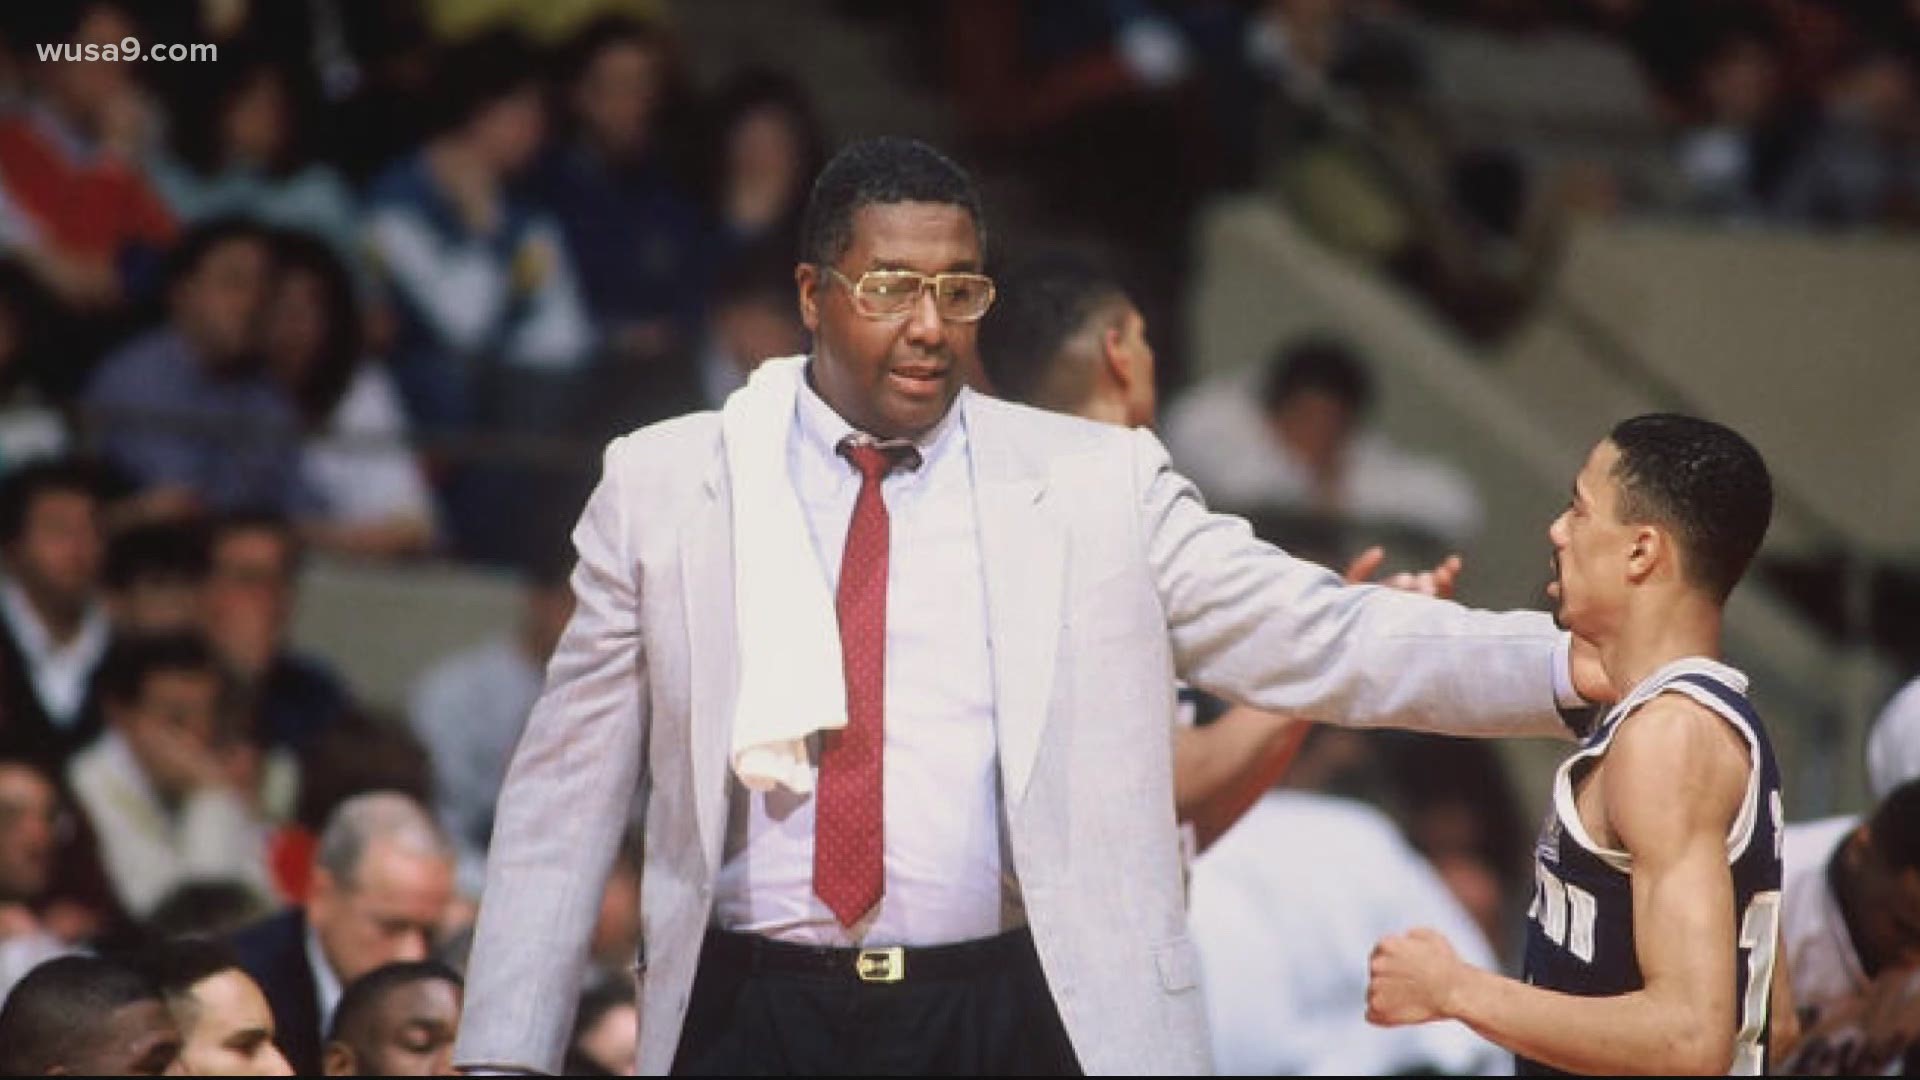 Patrick Ewing hired as Georgetown head basketball coach 